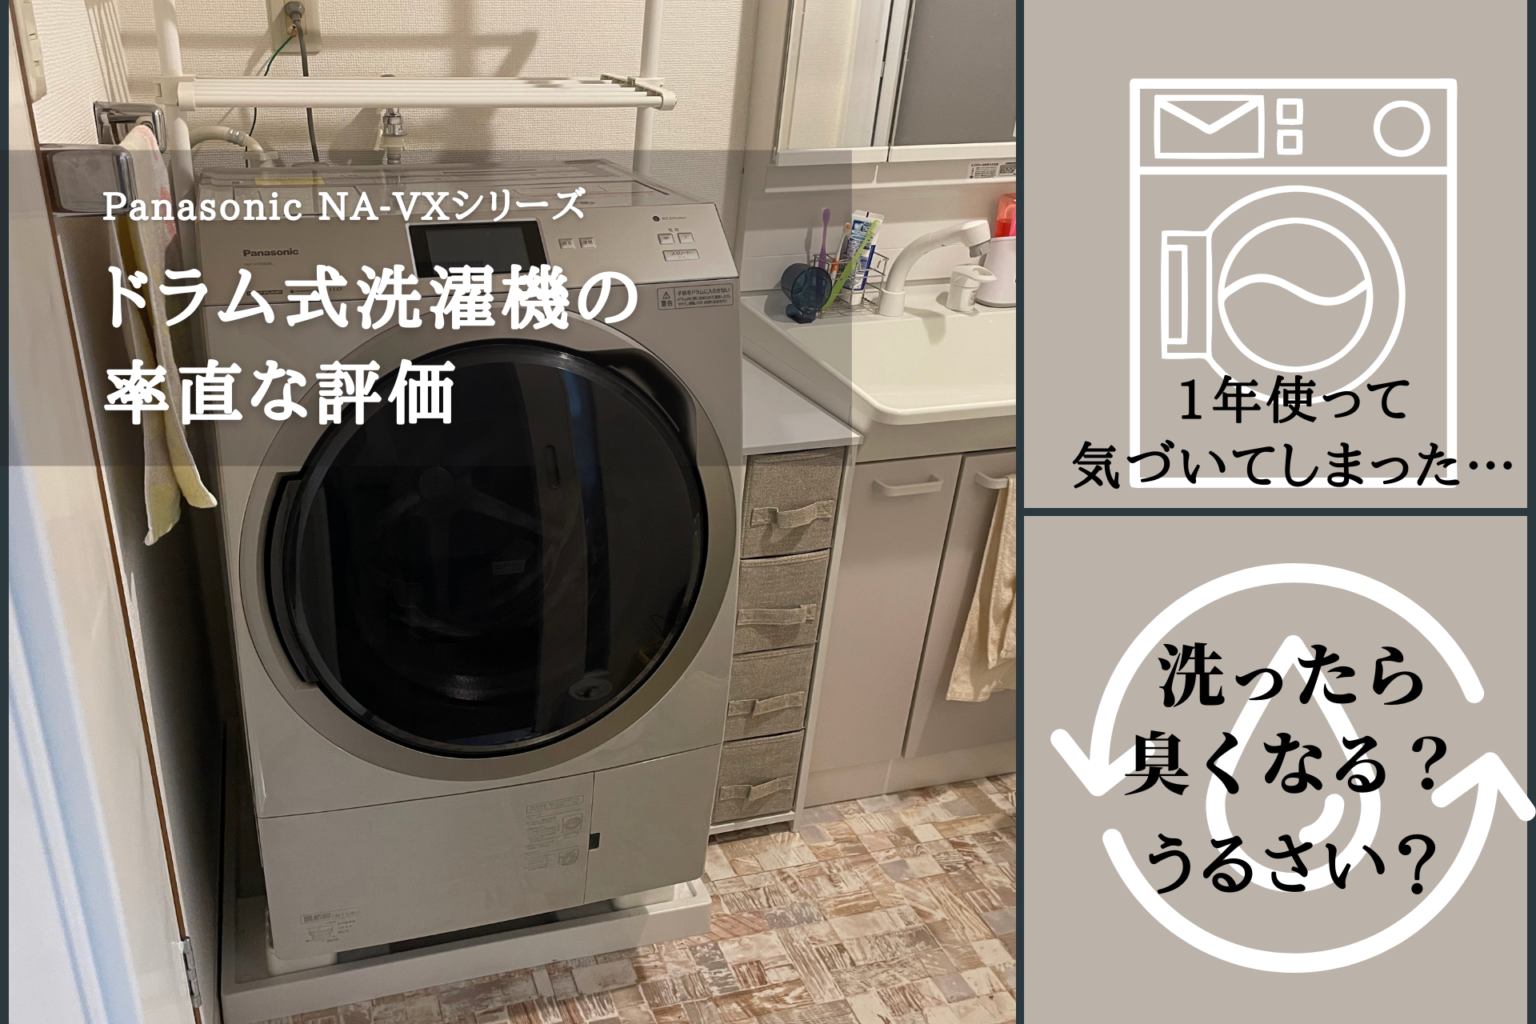 Panasonic NA-VX9700Rドラム式洗濯機 ヒートポンプ式 - 洗濯機